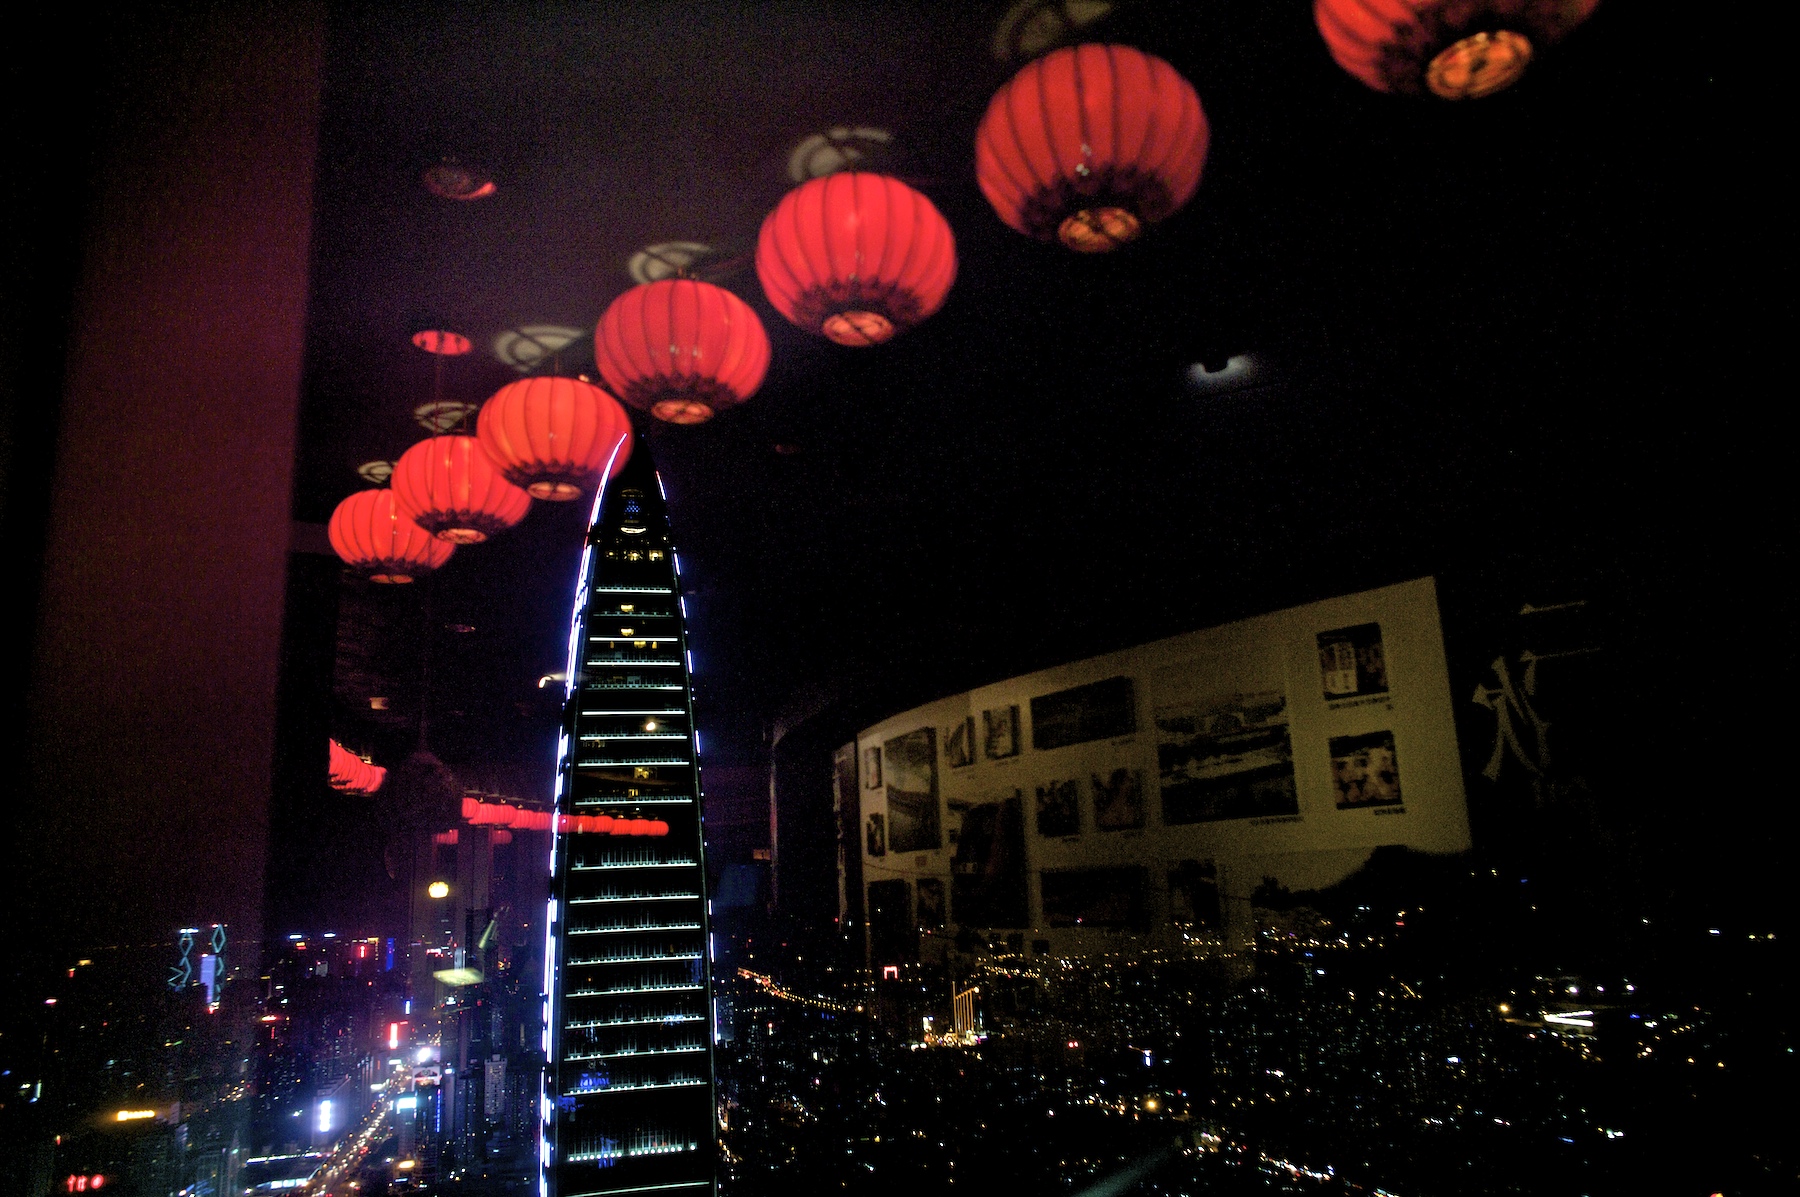 Shenzhen, Guangdong Province, March 2012